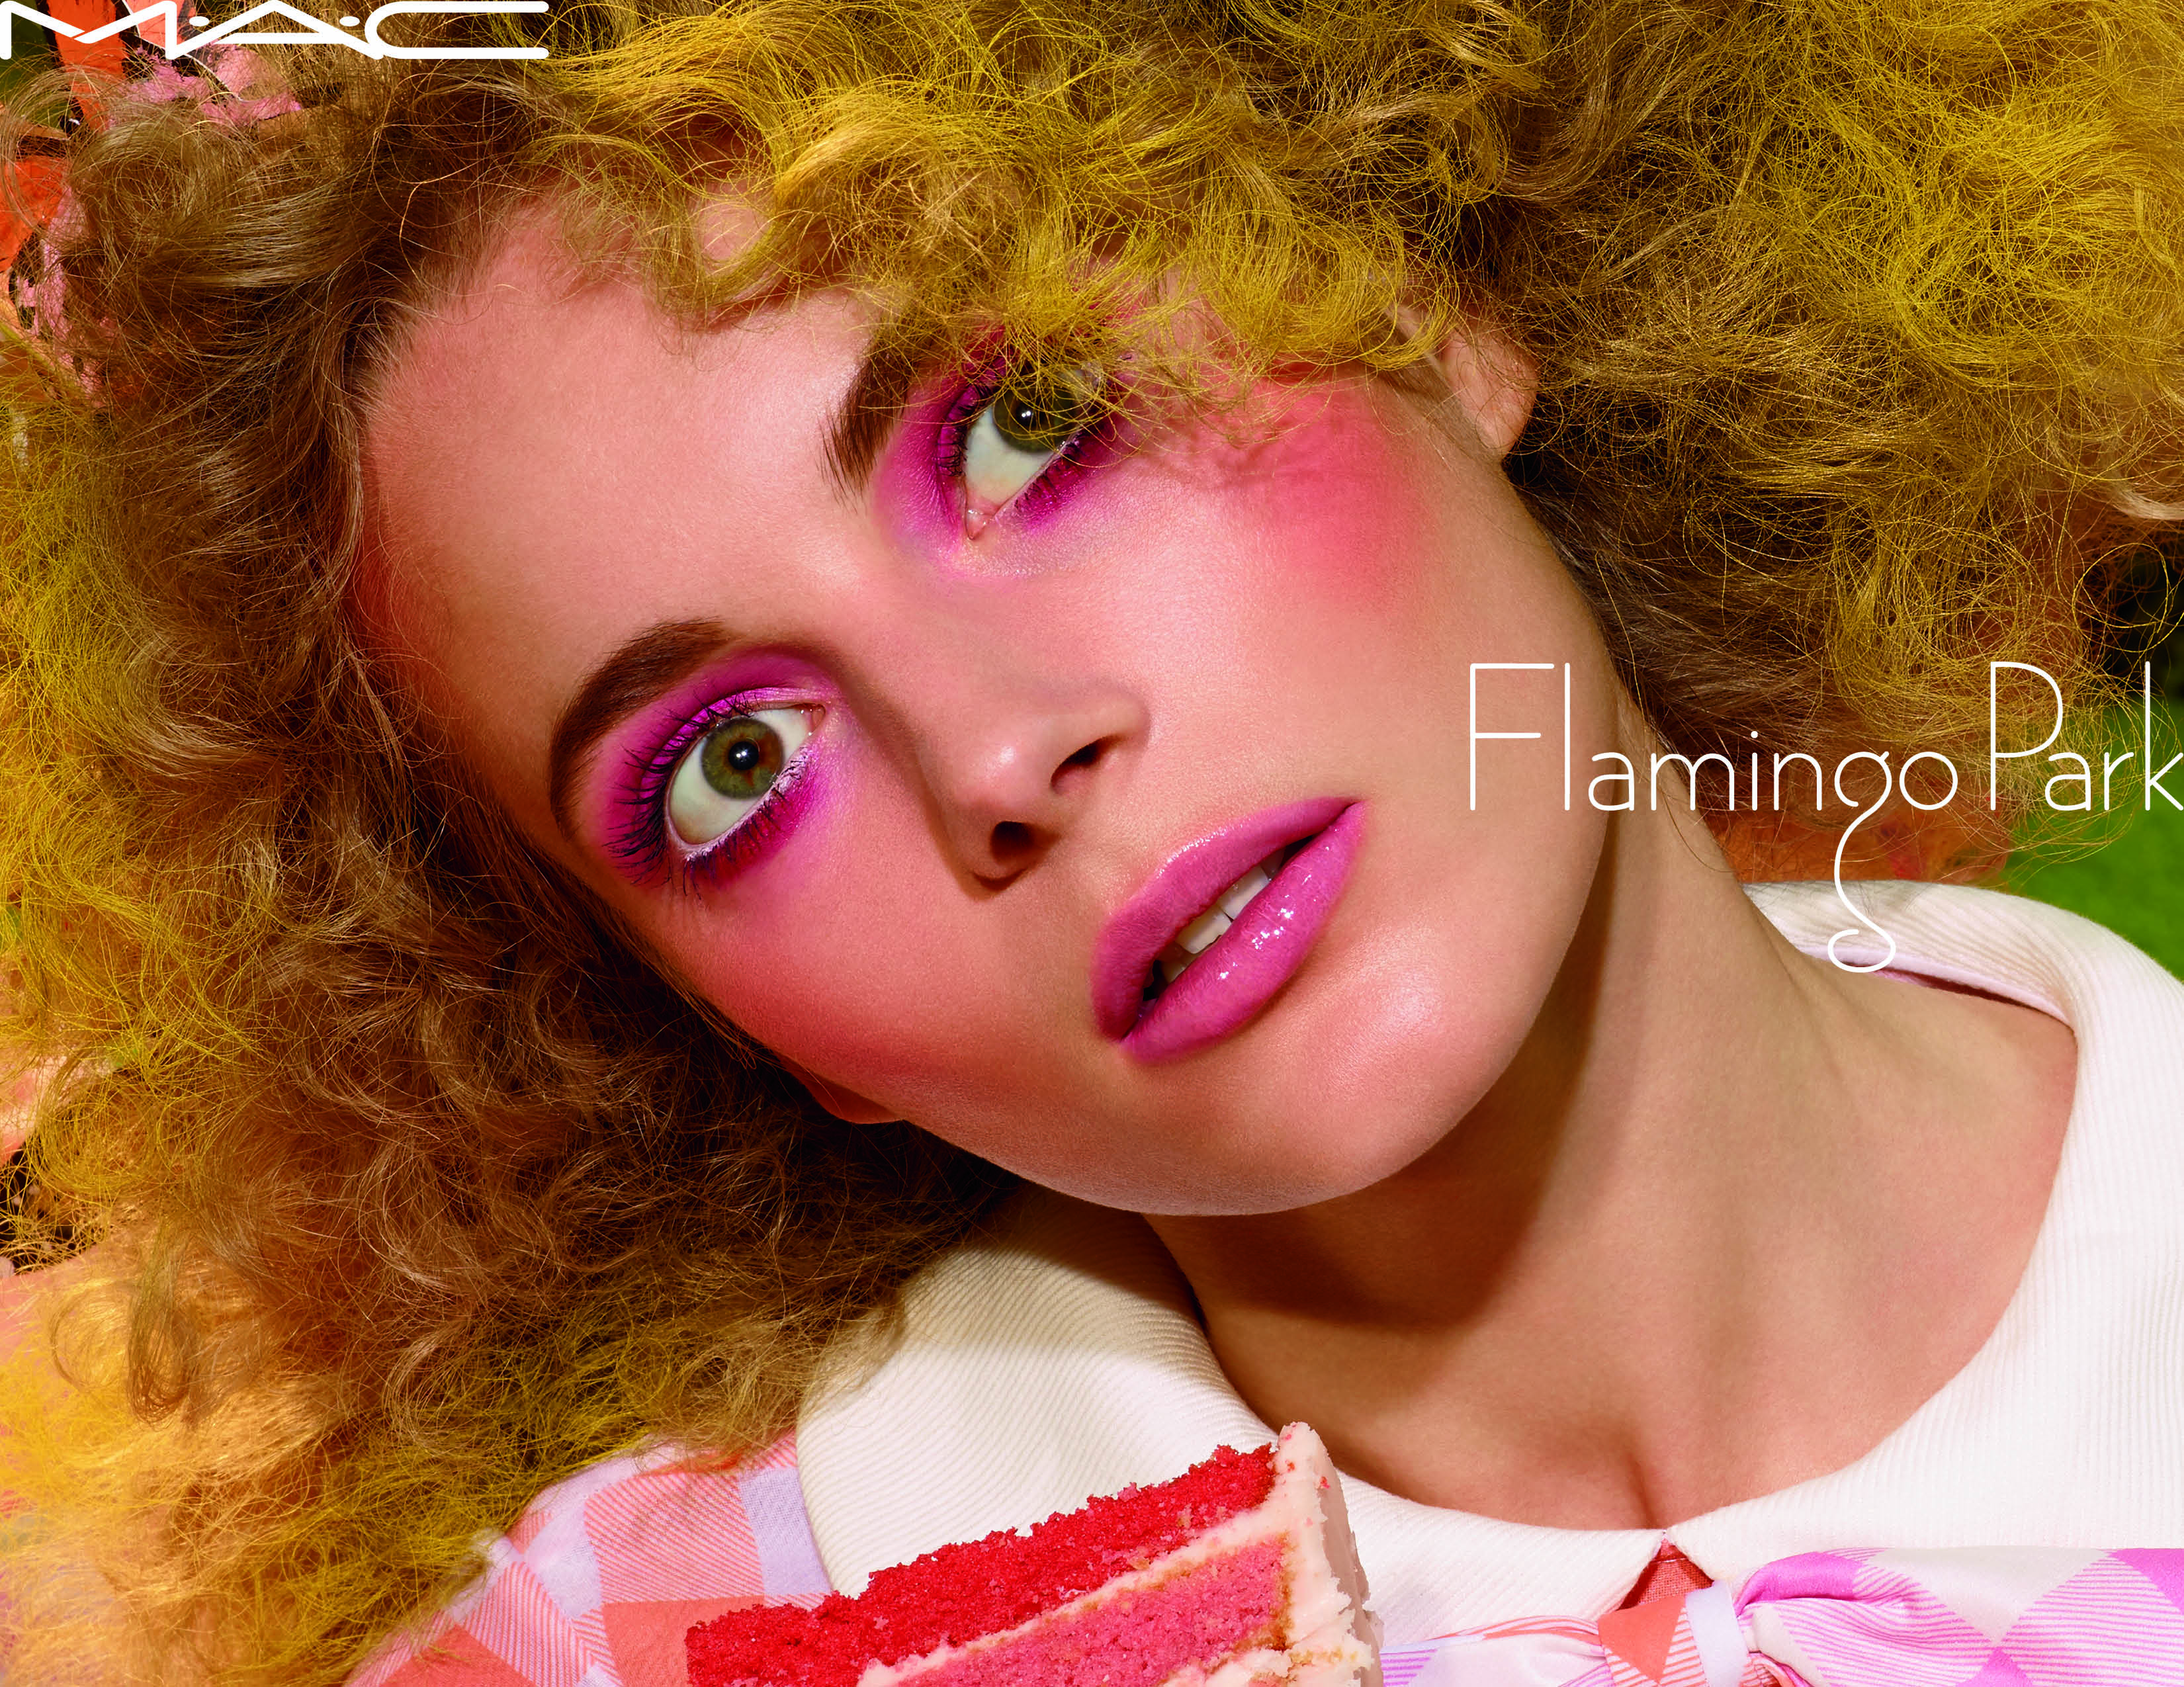 flamingo_park_beauty_3002.jpg